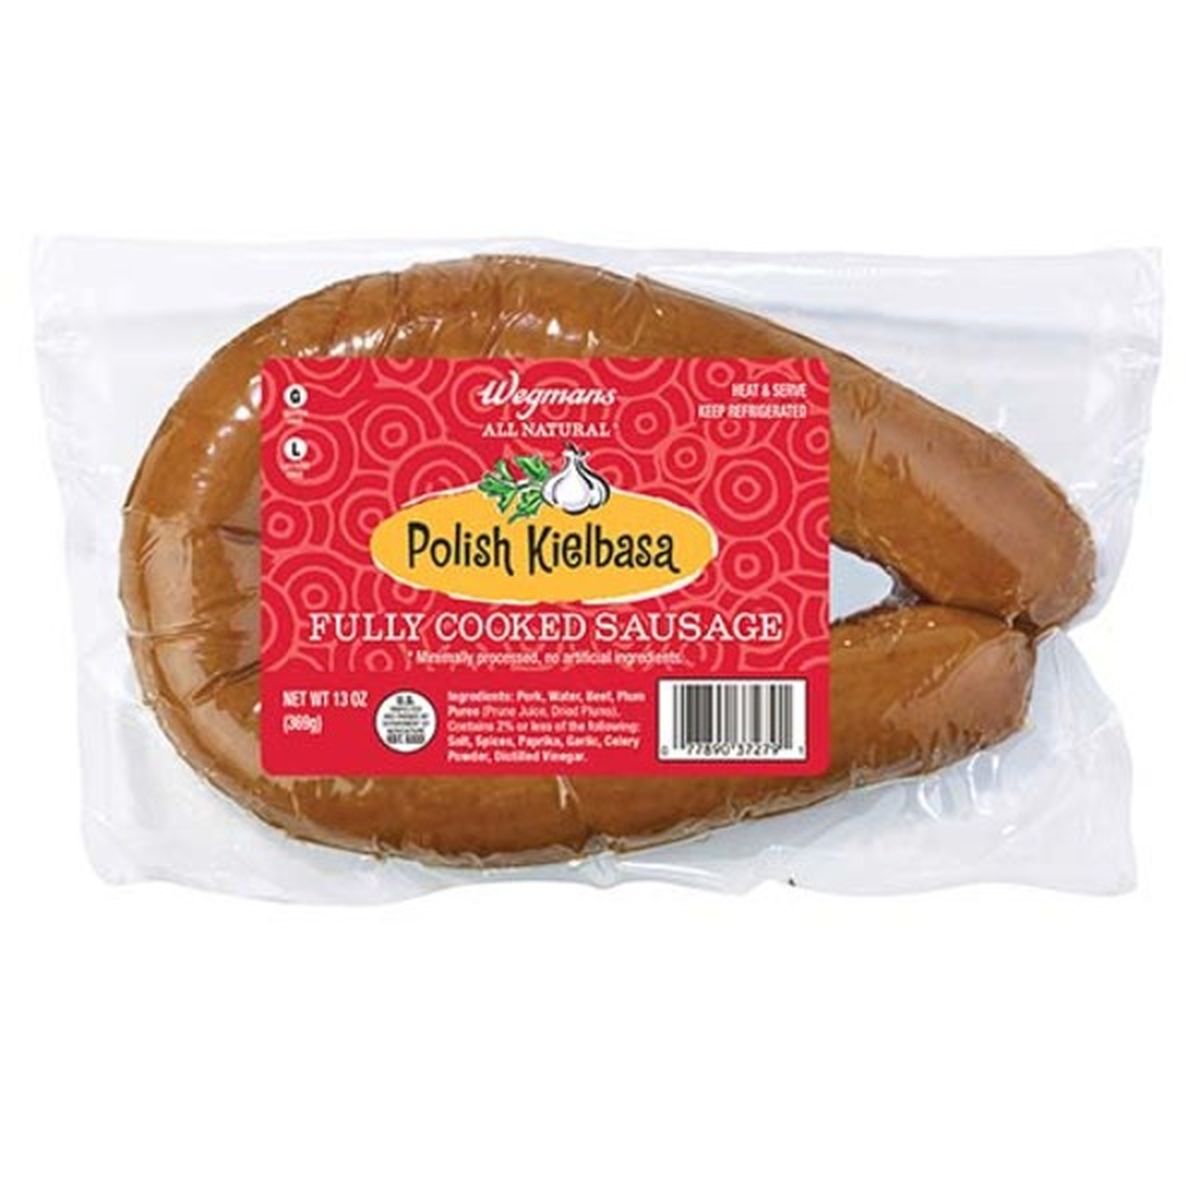 Calories in Wegmans All Natural Polish Kielbasa Fully Cooked Sausage